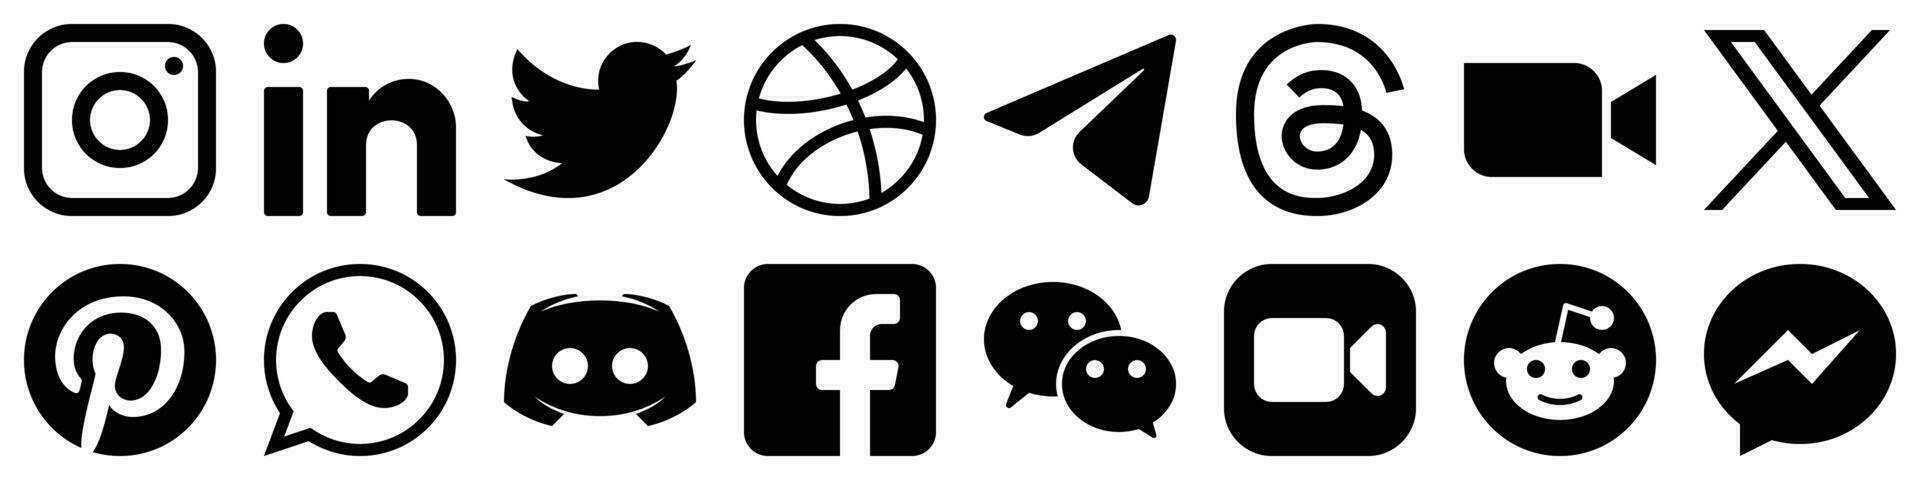 Majeur social médias marque logo Icônes vecteur